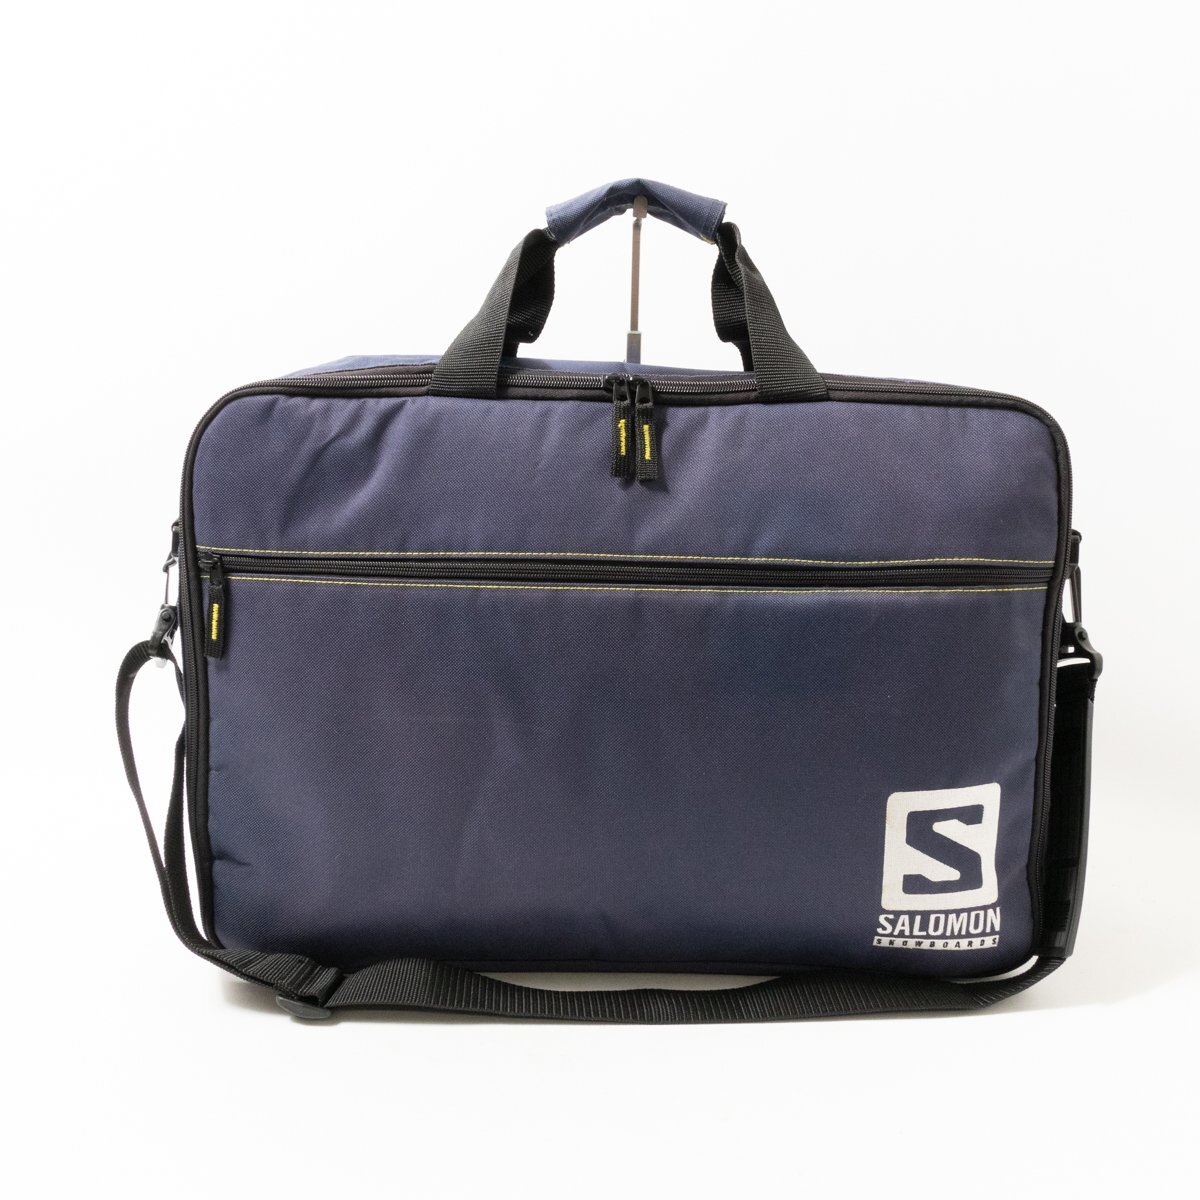 [1 jpy start ]SALOMON Salomon 2WAY shoulder bag tote bag navy navy blue black black nylon unisex man and woman use bag bag 